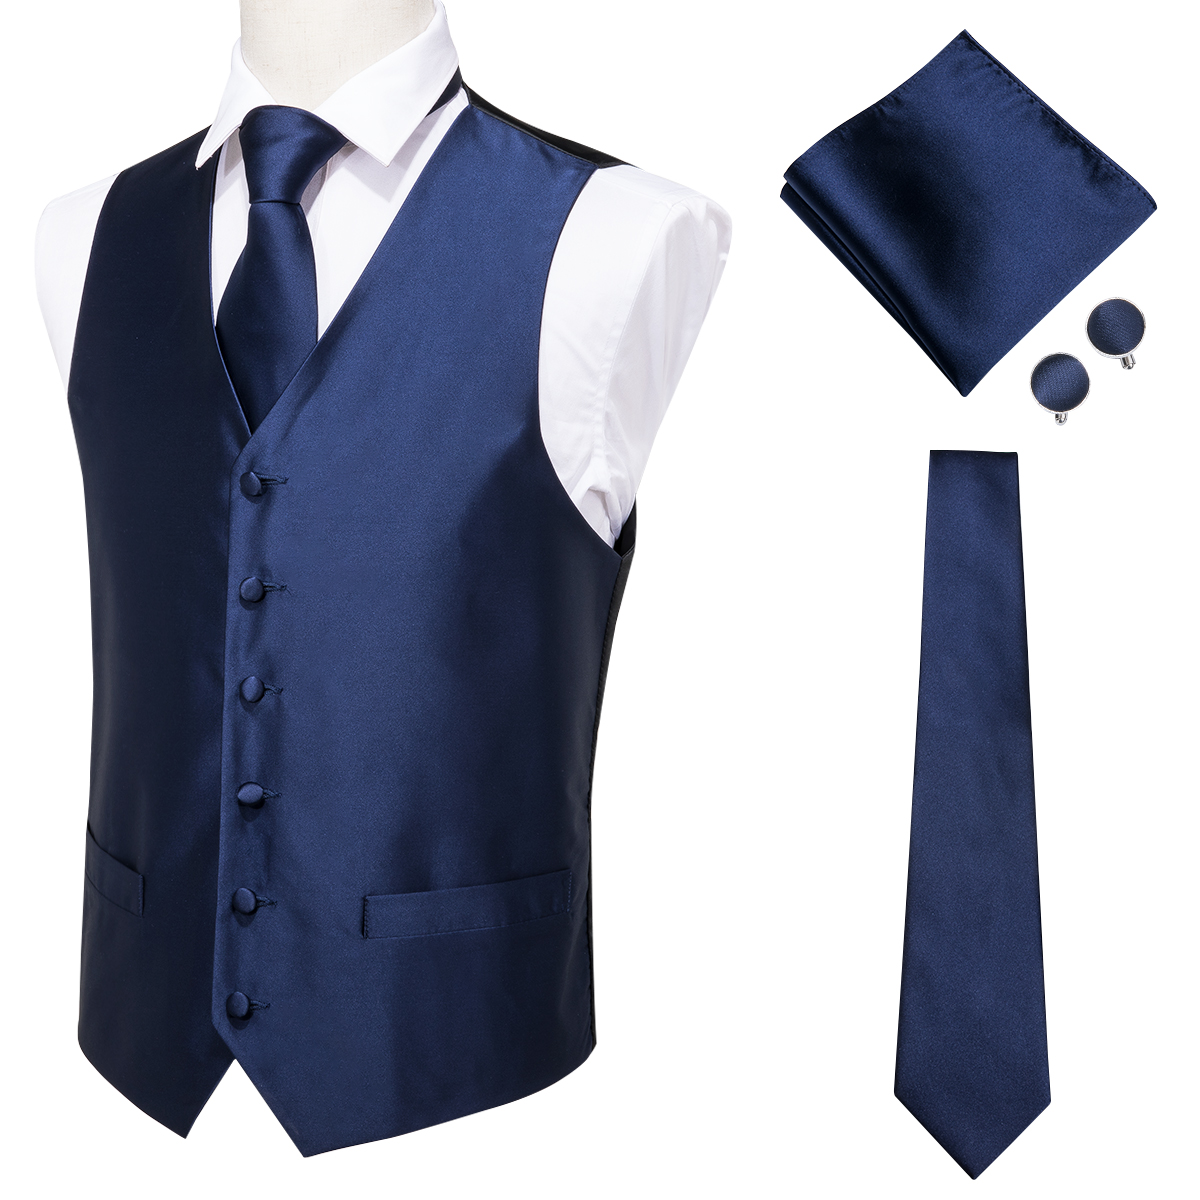 Hi-Tie 100% Silk Navy Men's Vest Suit Dress Vest Set For Men Solid Blue Smart Casual Male Waistcoat For Business Formal Jacket